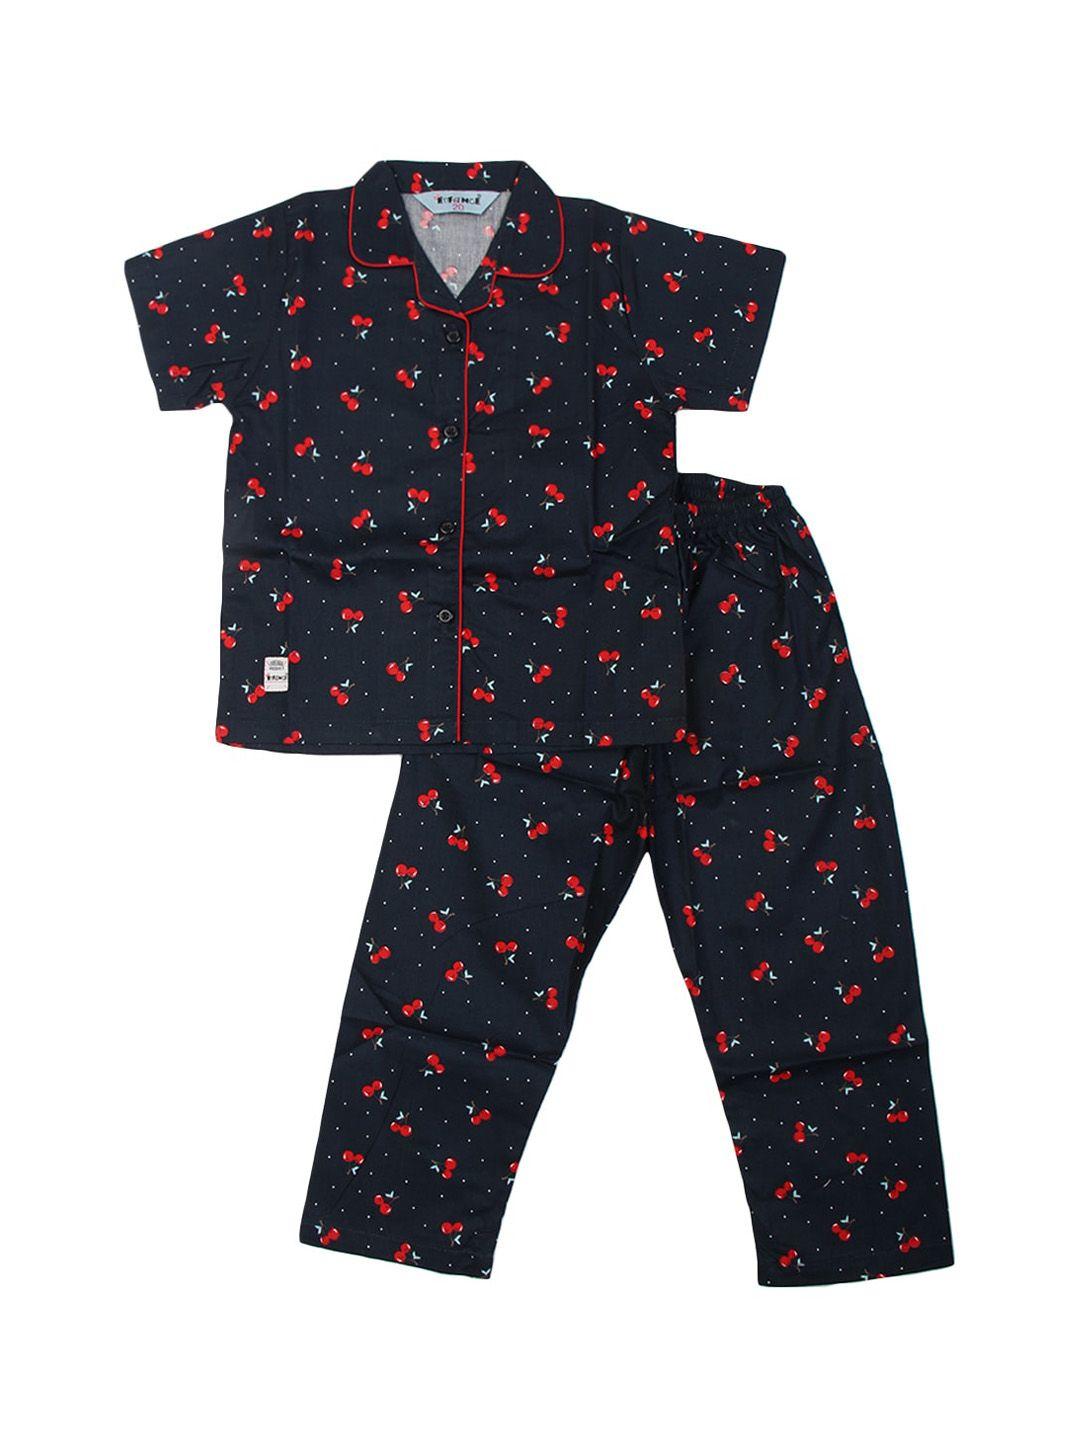 enfance unisex kids navy blue & red printed night suit